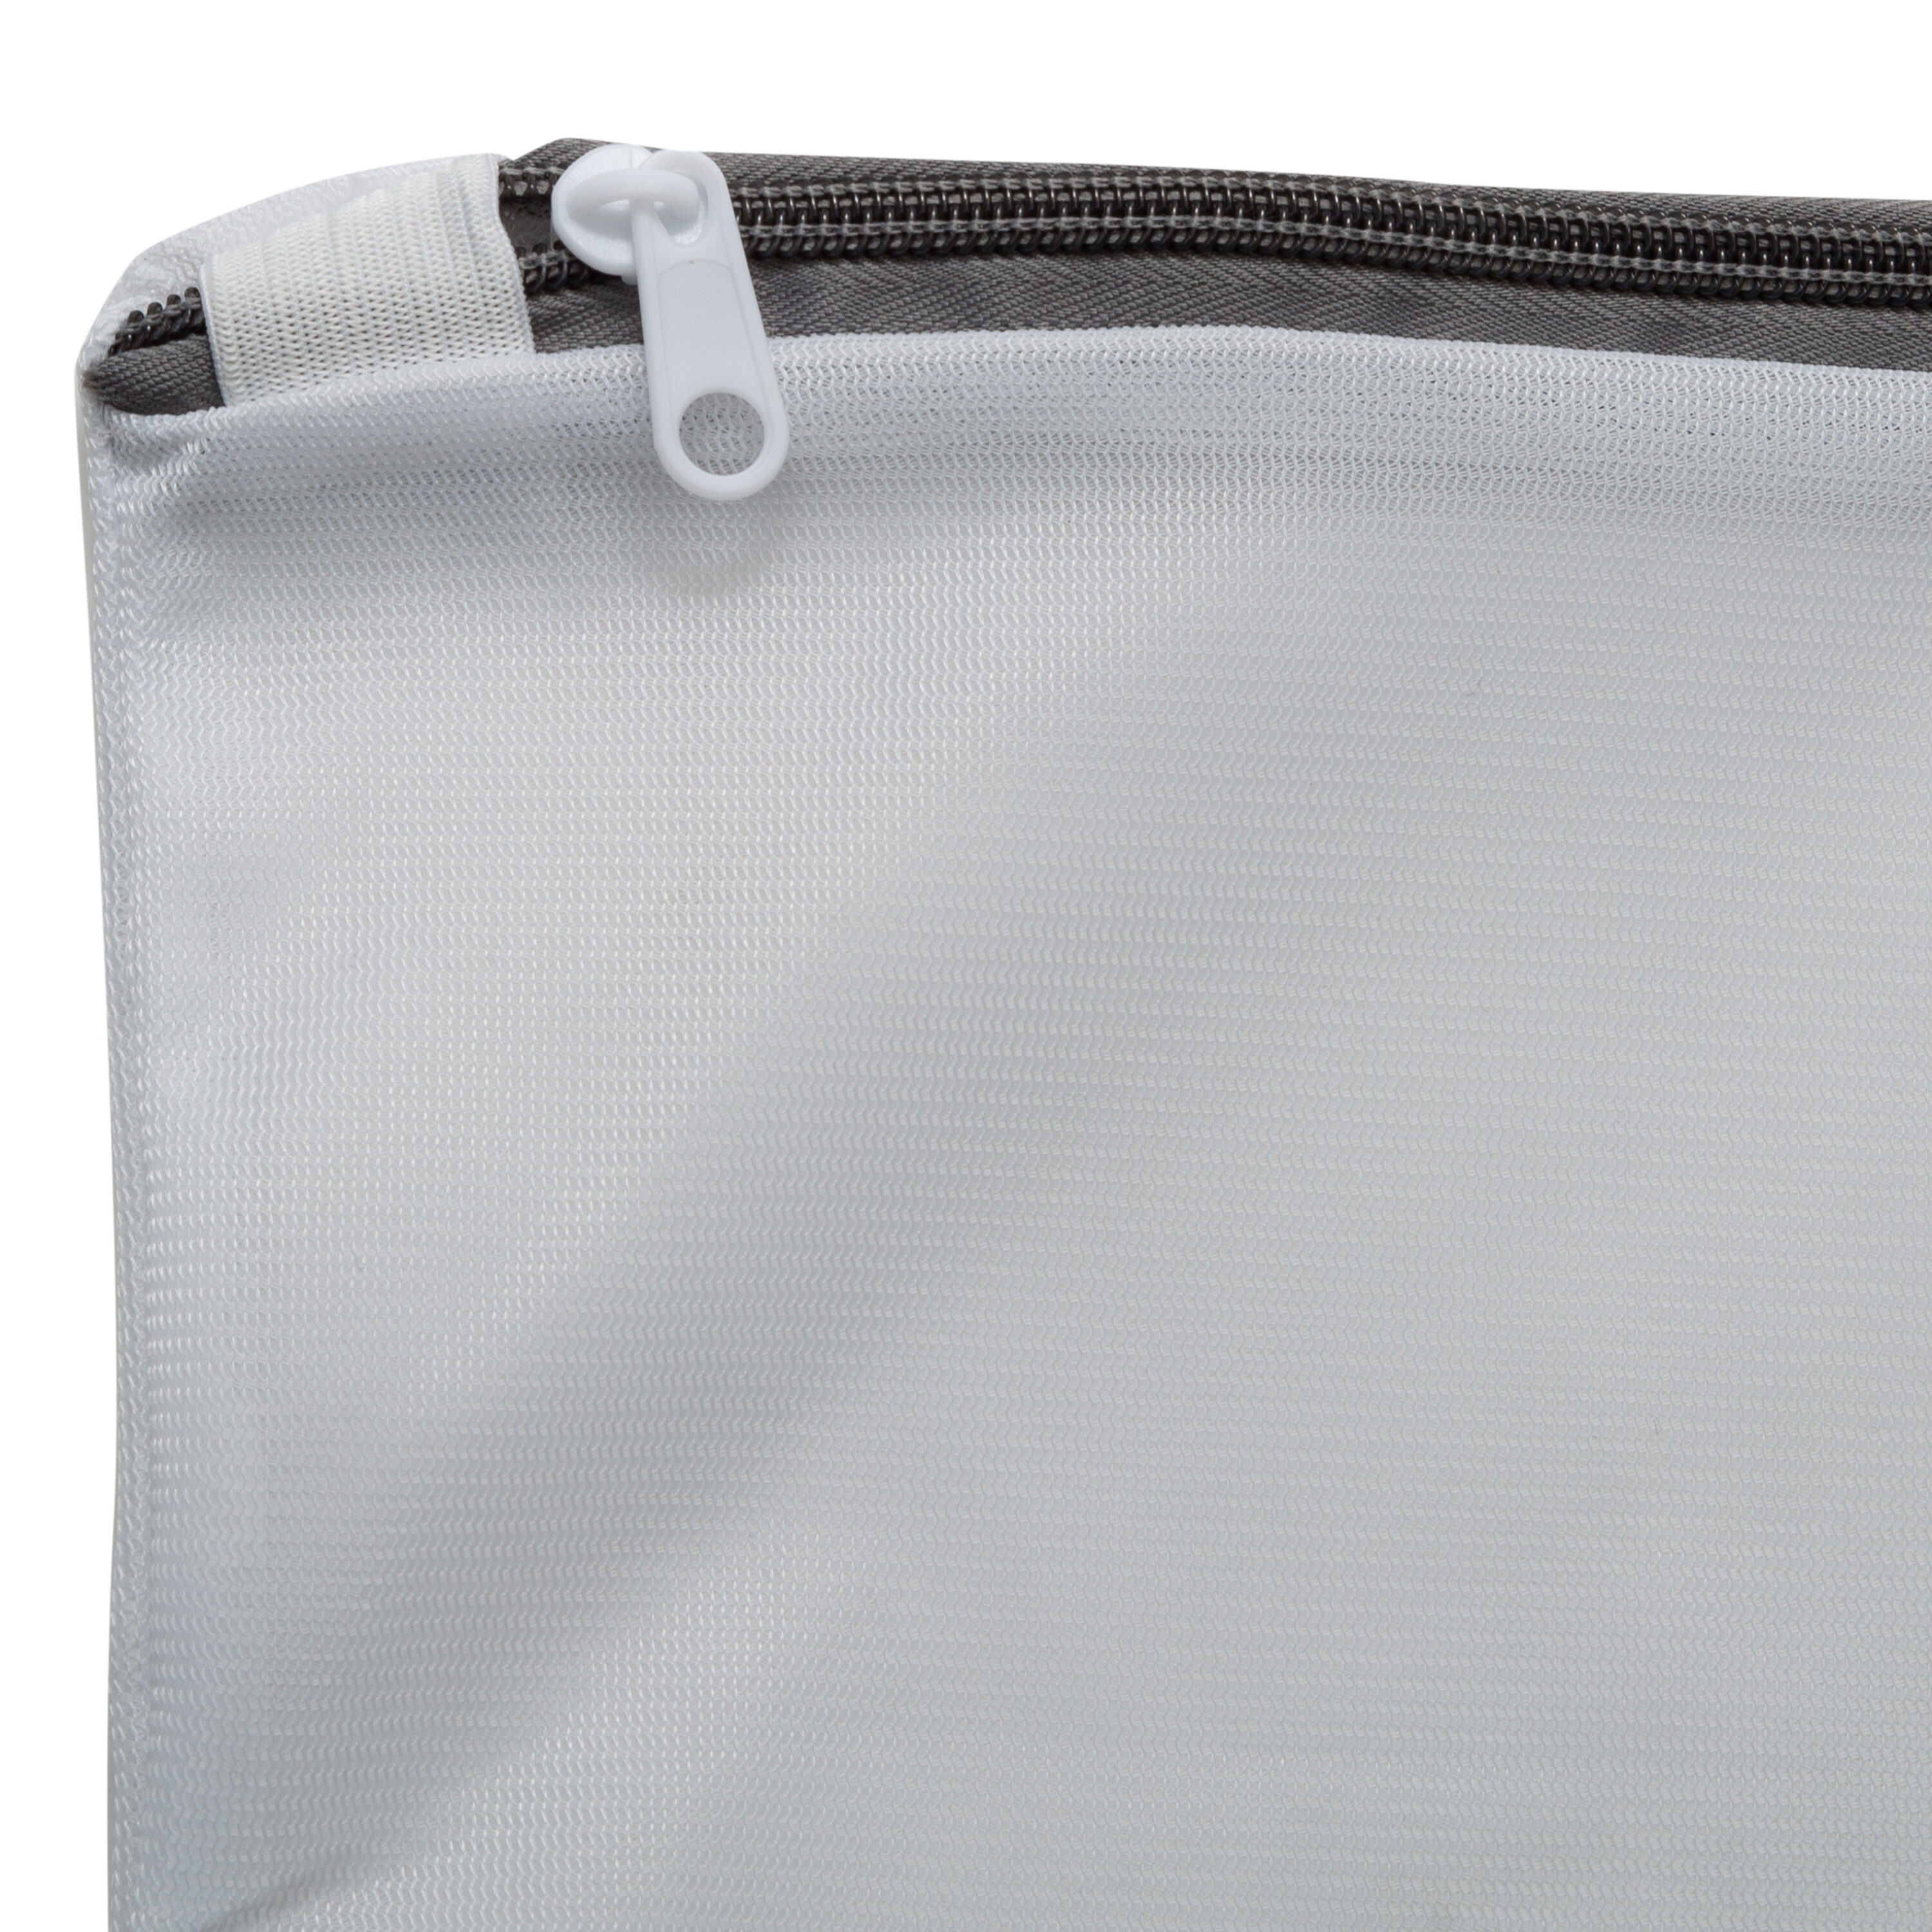 Woolite Polyester Wash Bags / Lingerie Bags & Reviews - Wayfair Canada